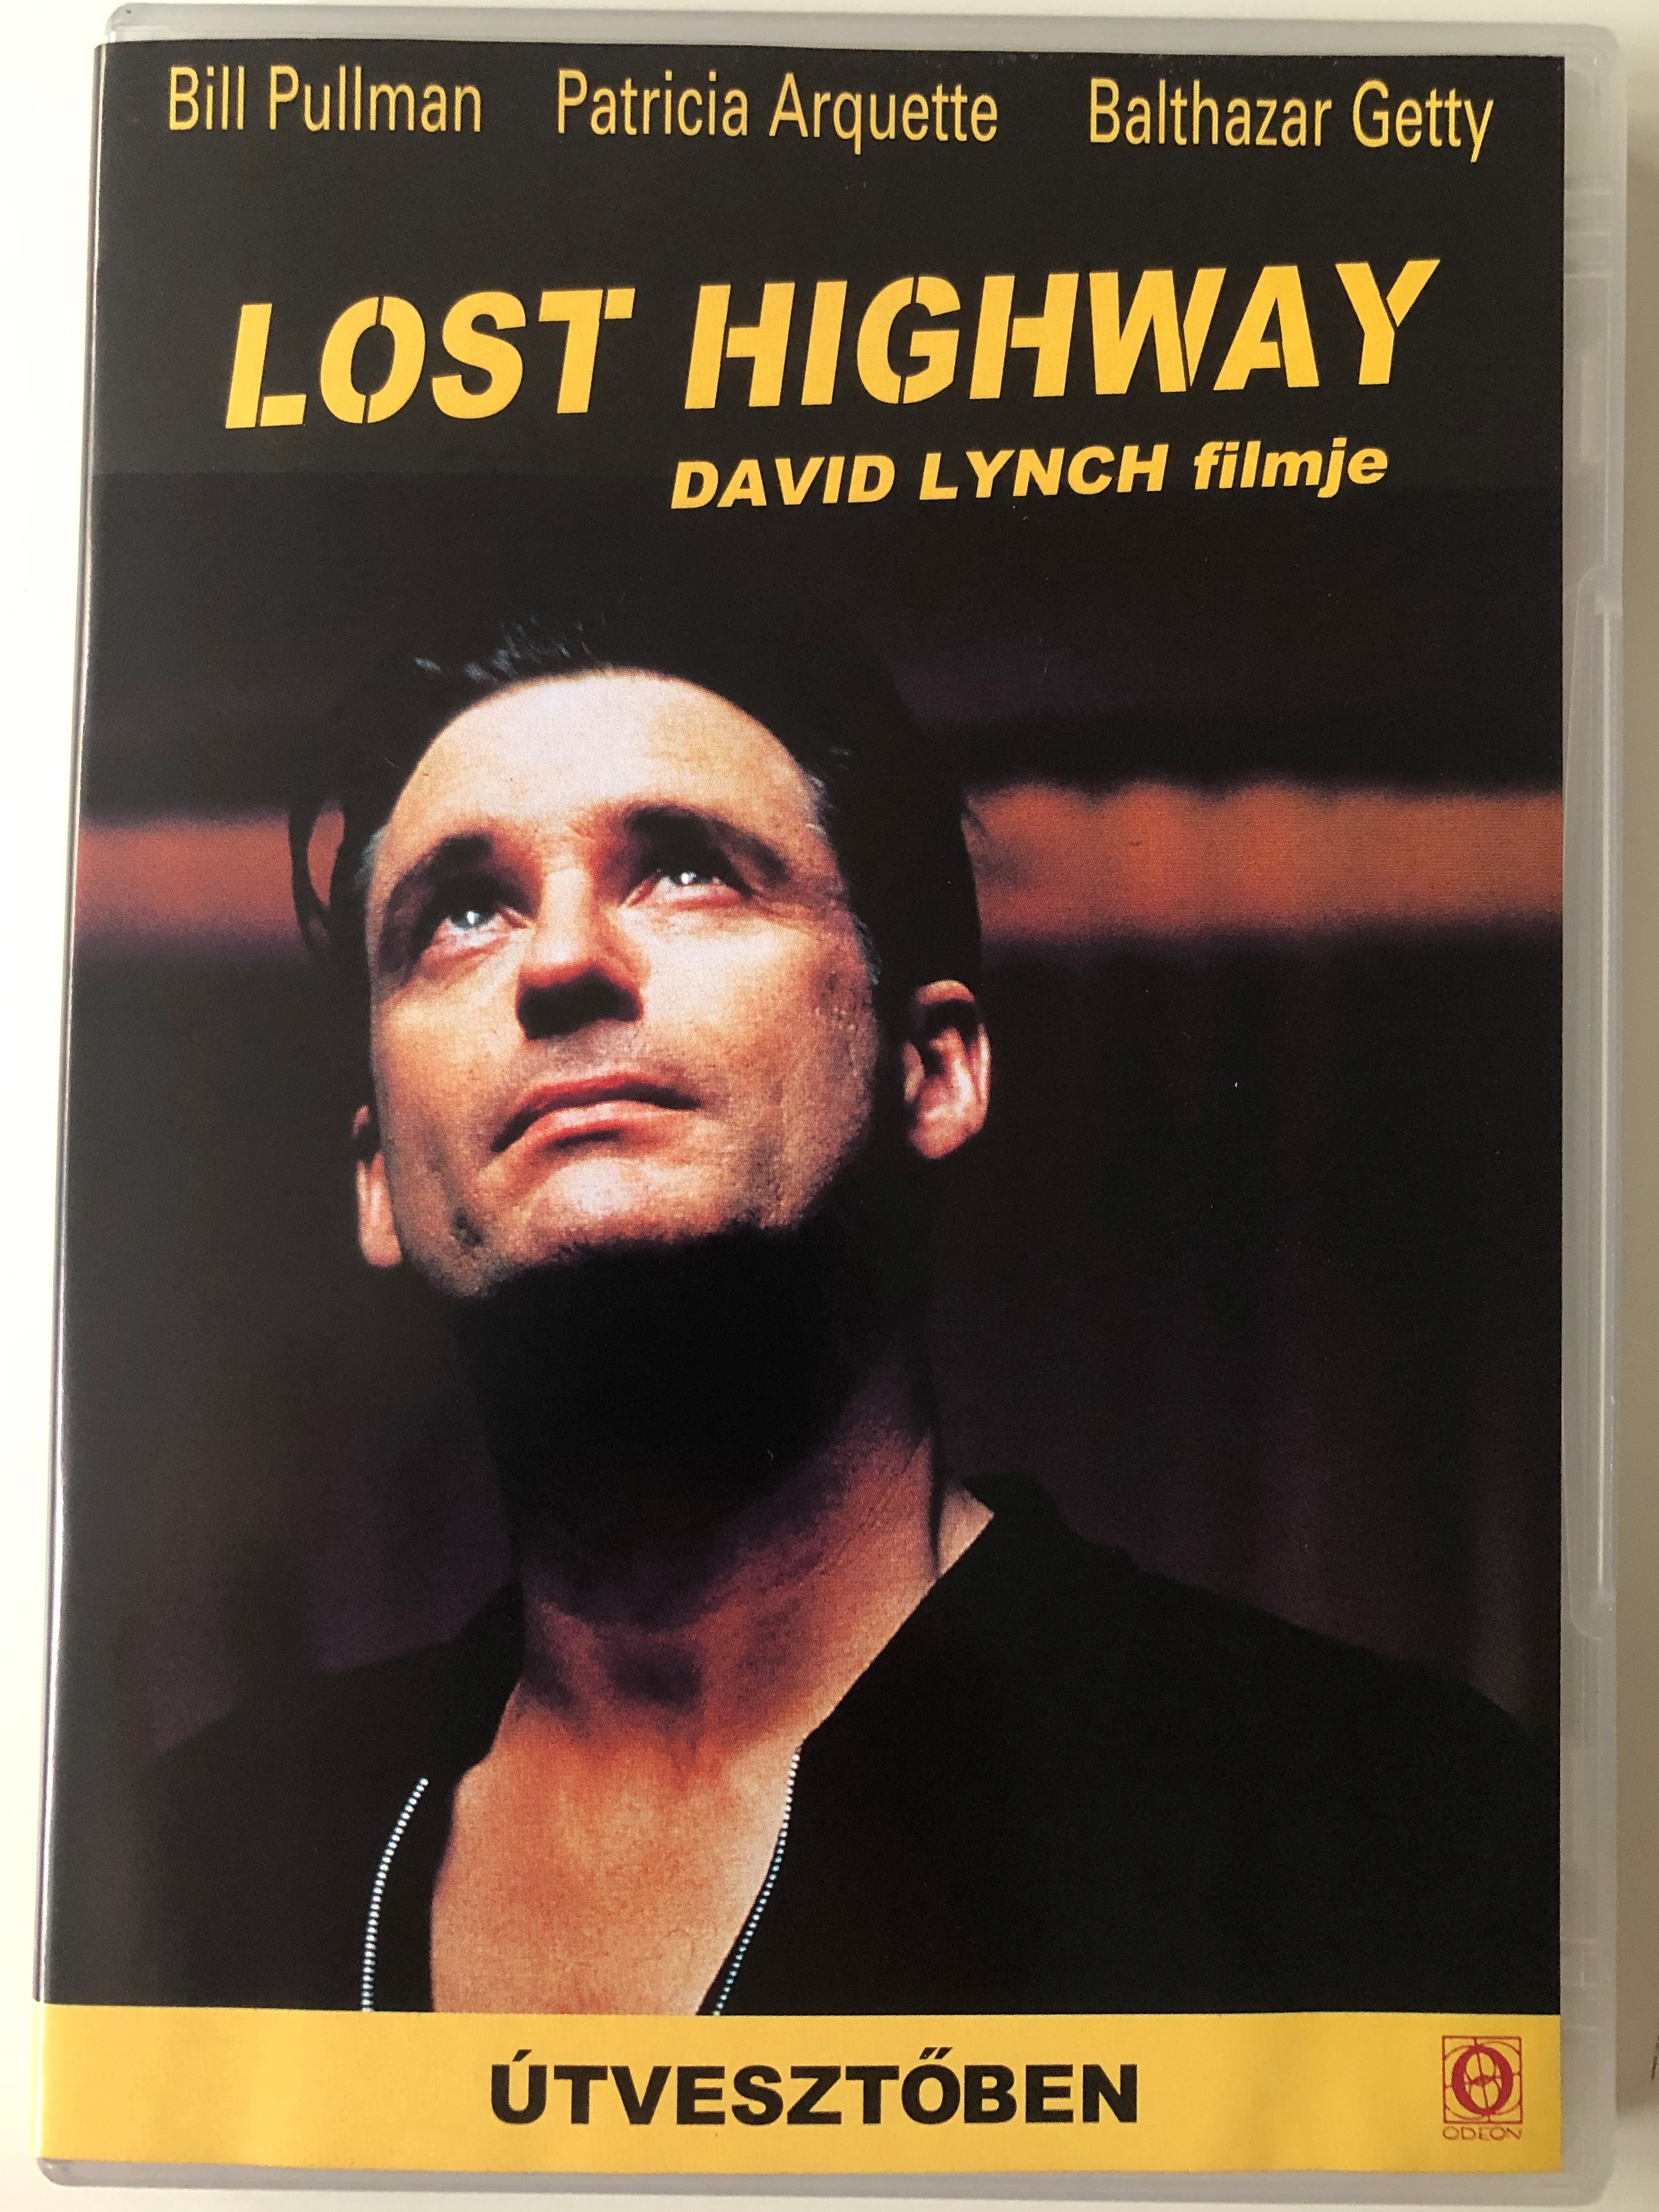 Lost Highway DVD 1997 Útvesztőben / Directed by David Lynch / Starring:  Bill Pullman, Patricia Arquette, Balthazar Getty - Bible in My Language